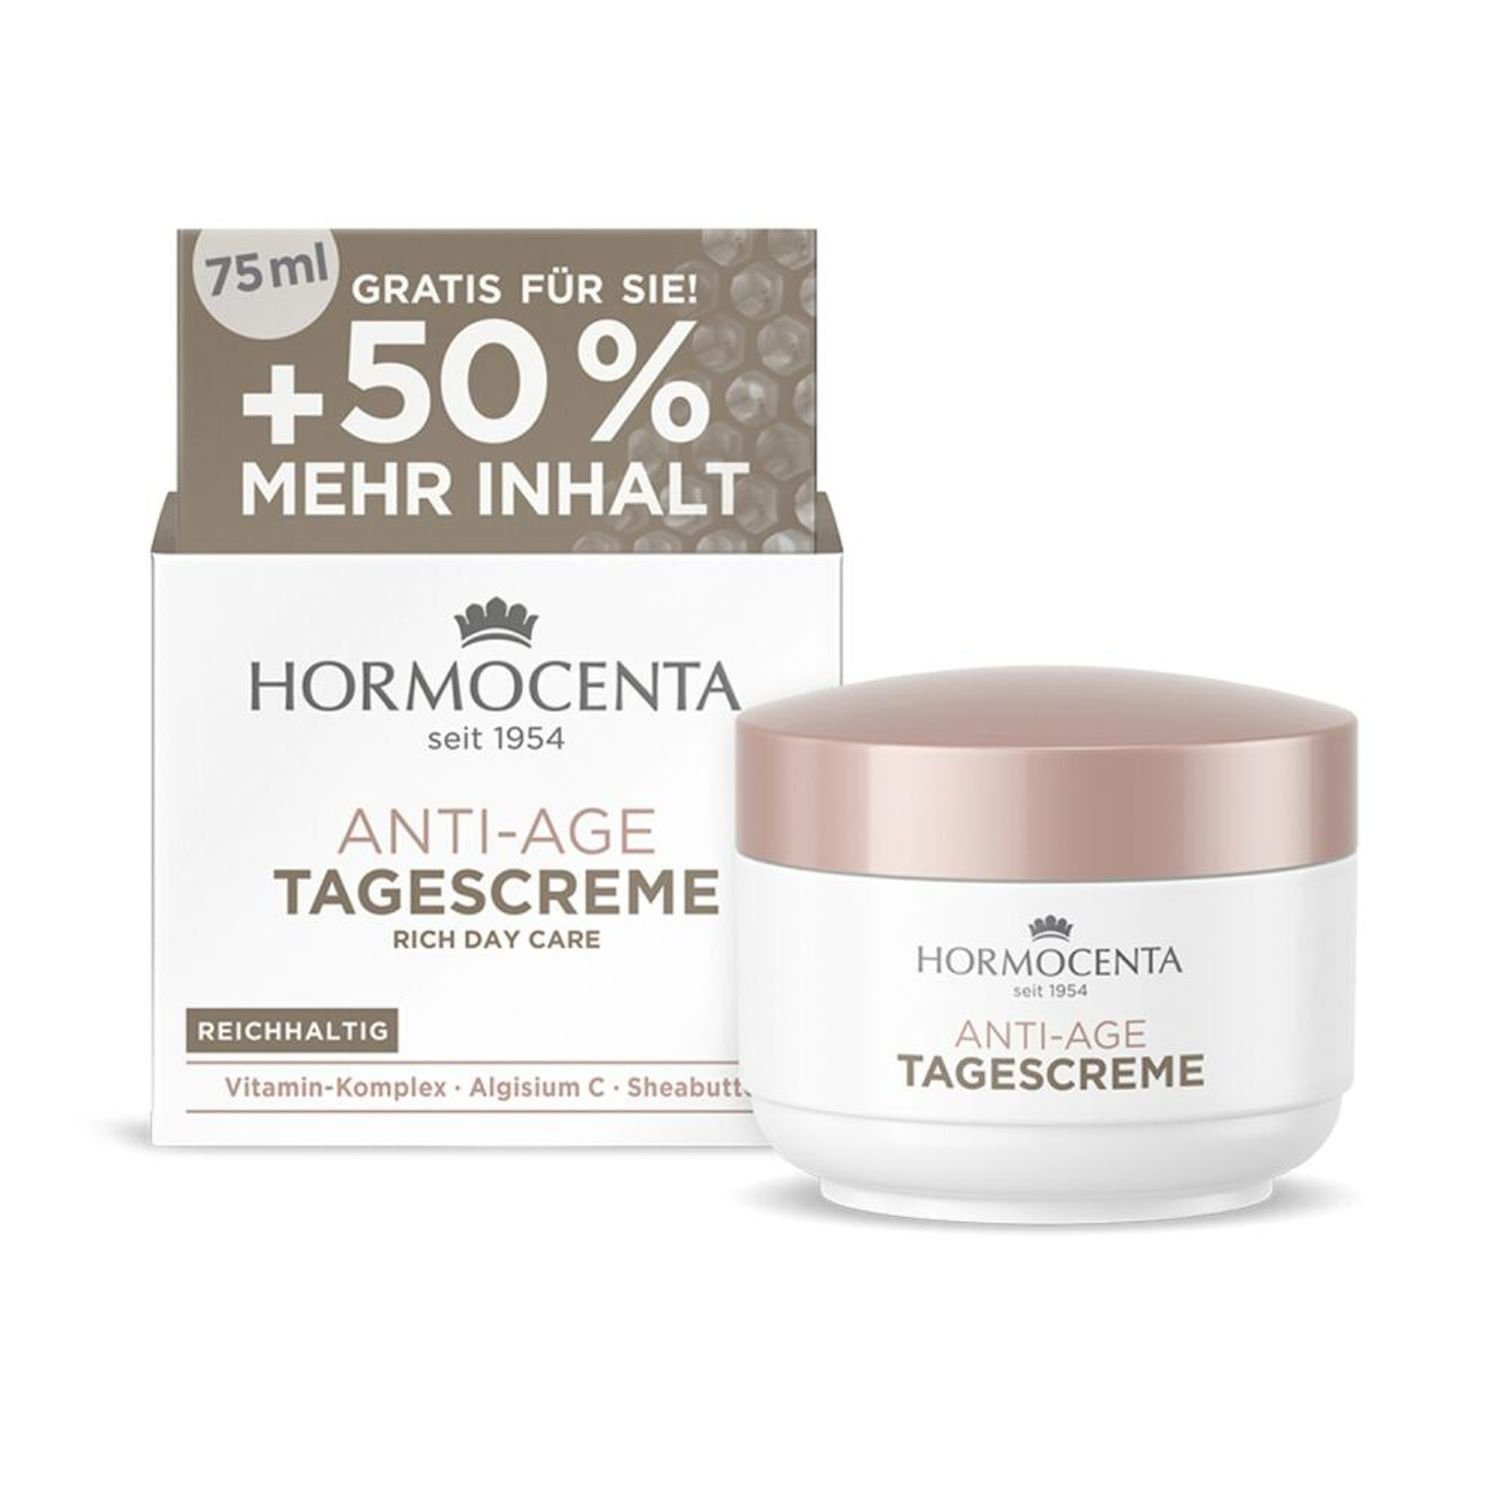 6x Hormocenta Age GmbH Tagescreme Haut Lotion Hormocenta Anti Kosmetik Körpercreme Gesicht 75ml Pflege